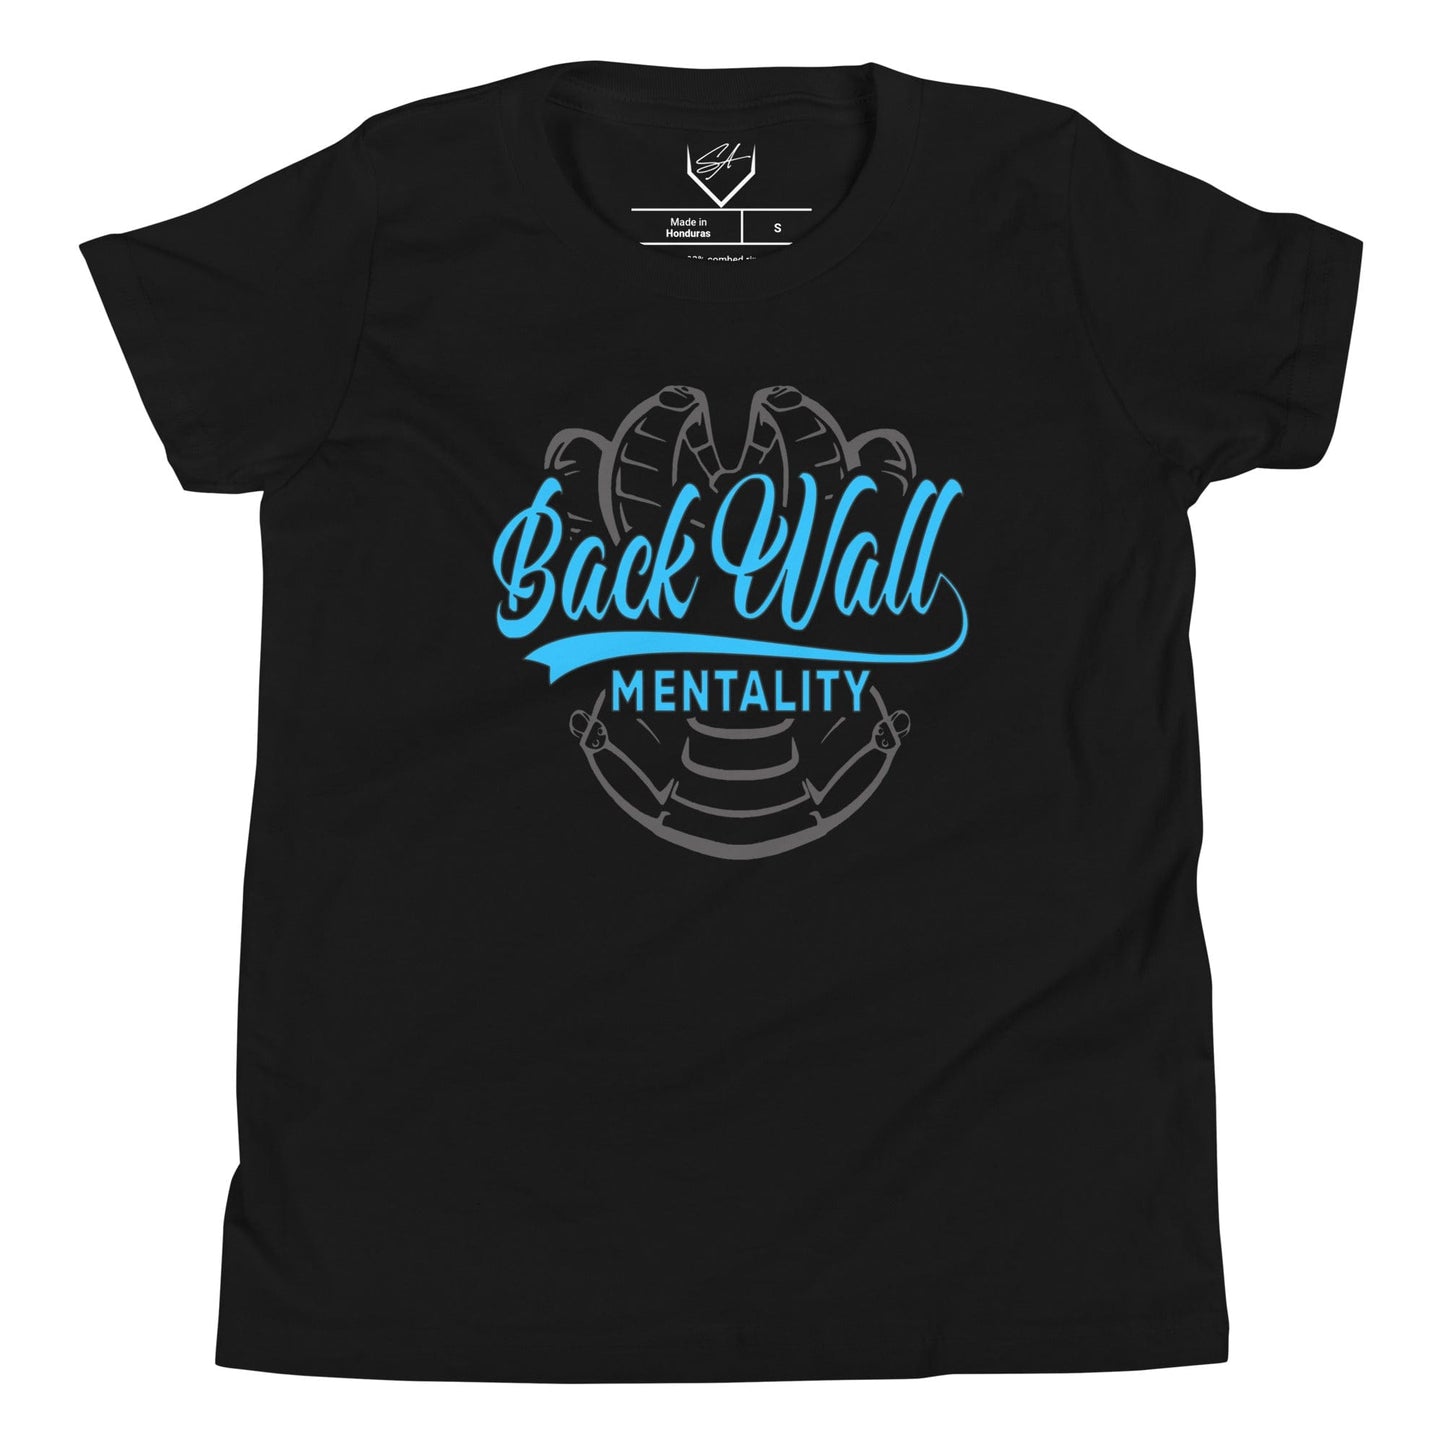 Backwall Mentality Teal - Youth Tee